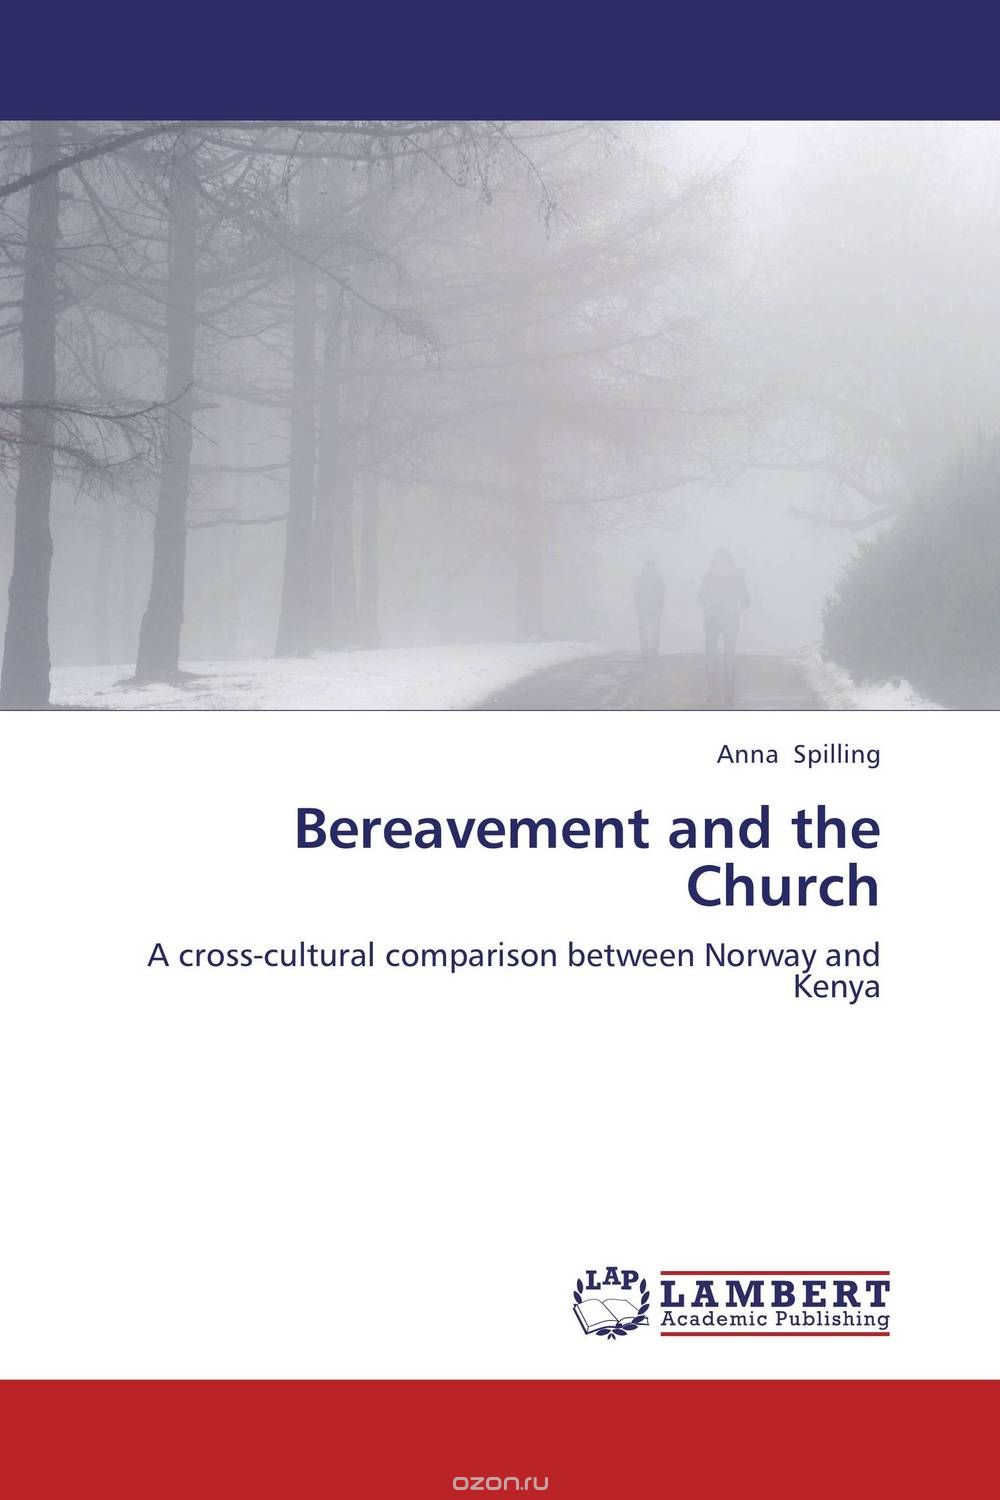 Скачать книгу "Bereavement and the Church"